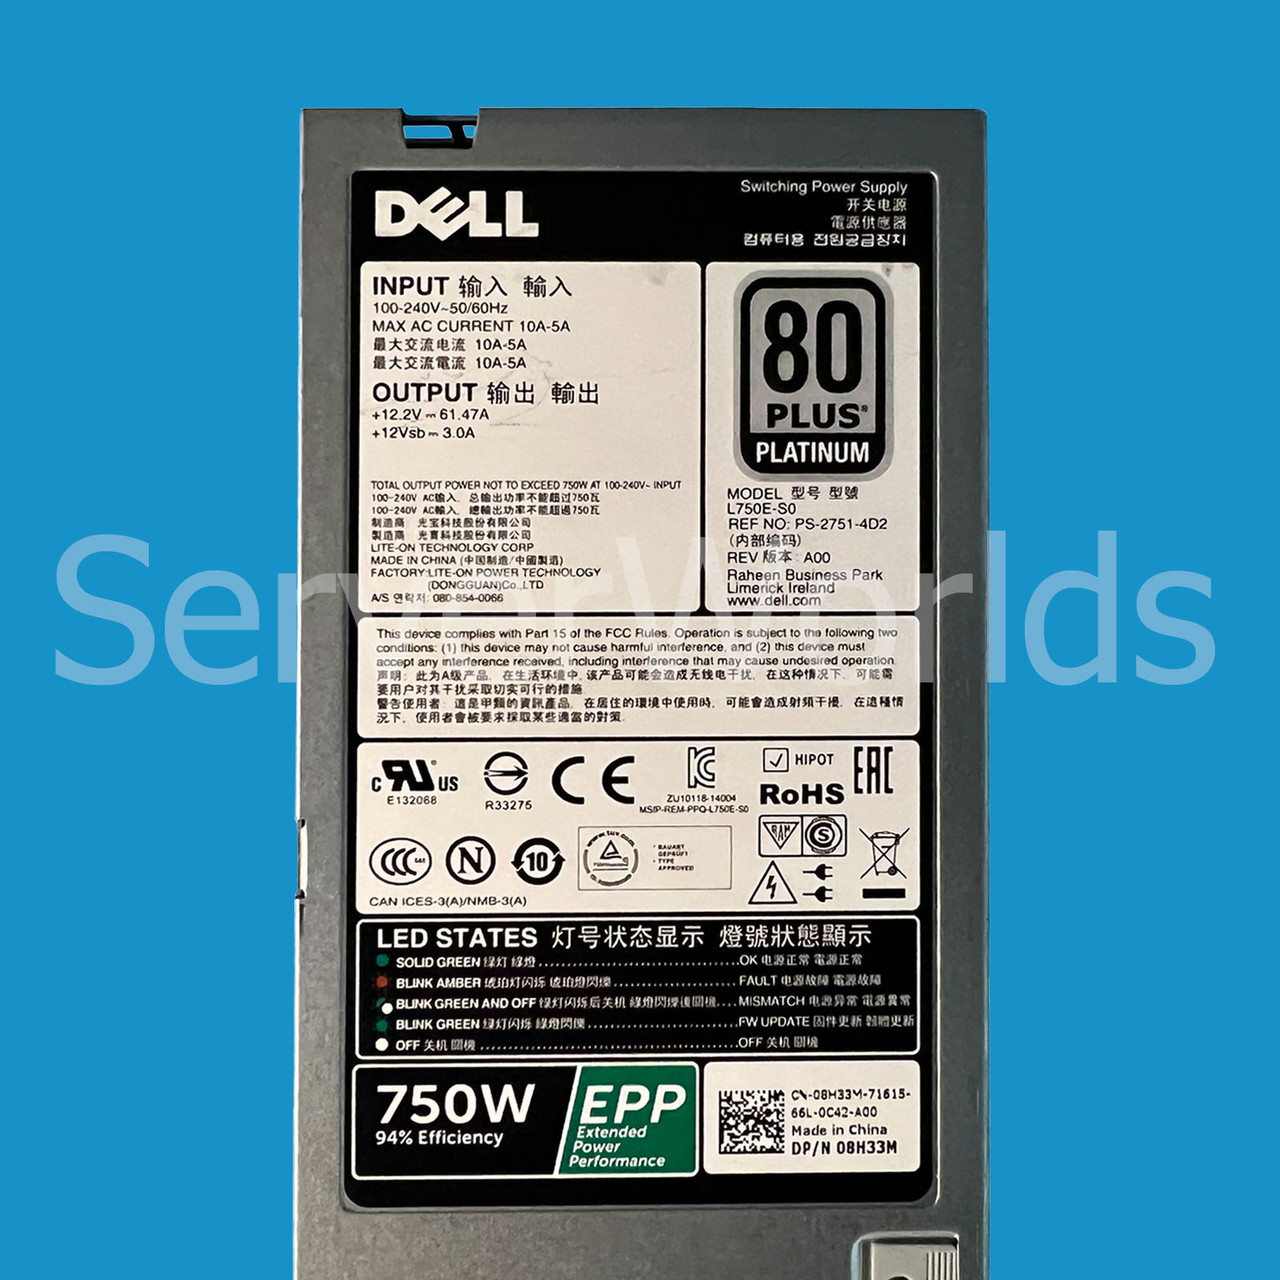 Dell 8H33M Platinum 750W Power Supply L750E-S0 PS-2751-4D2